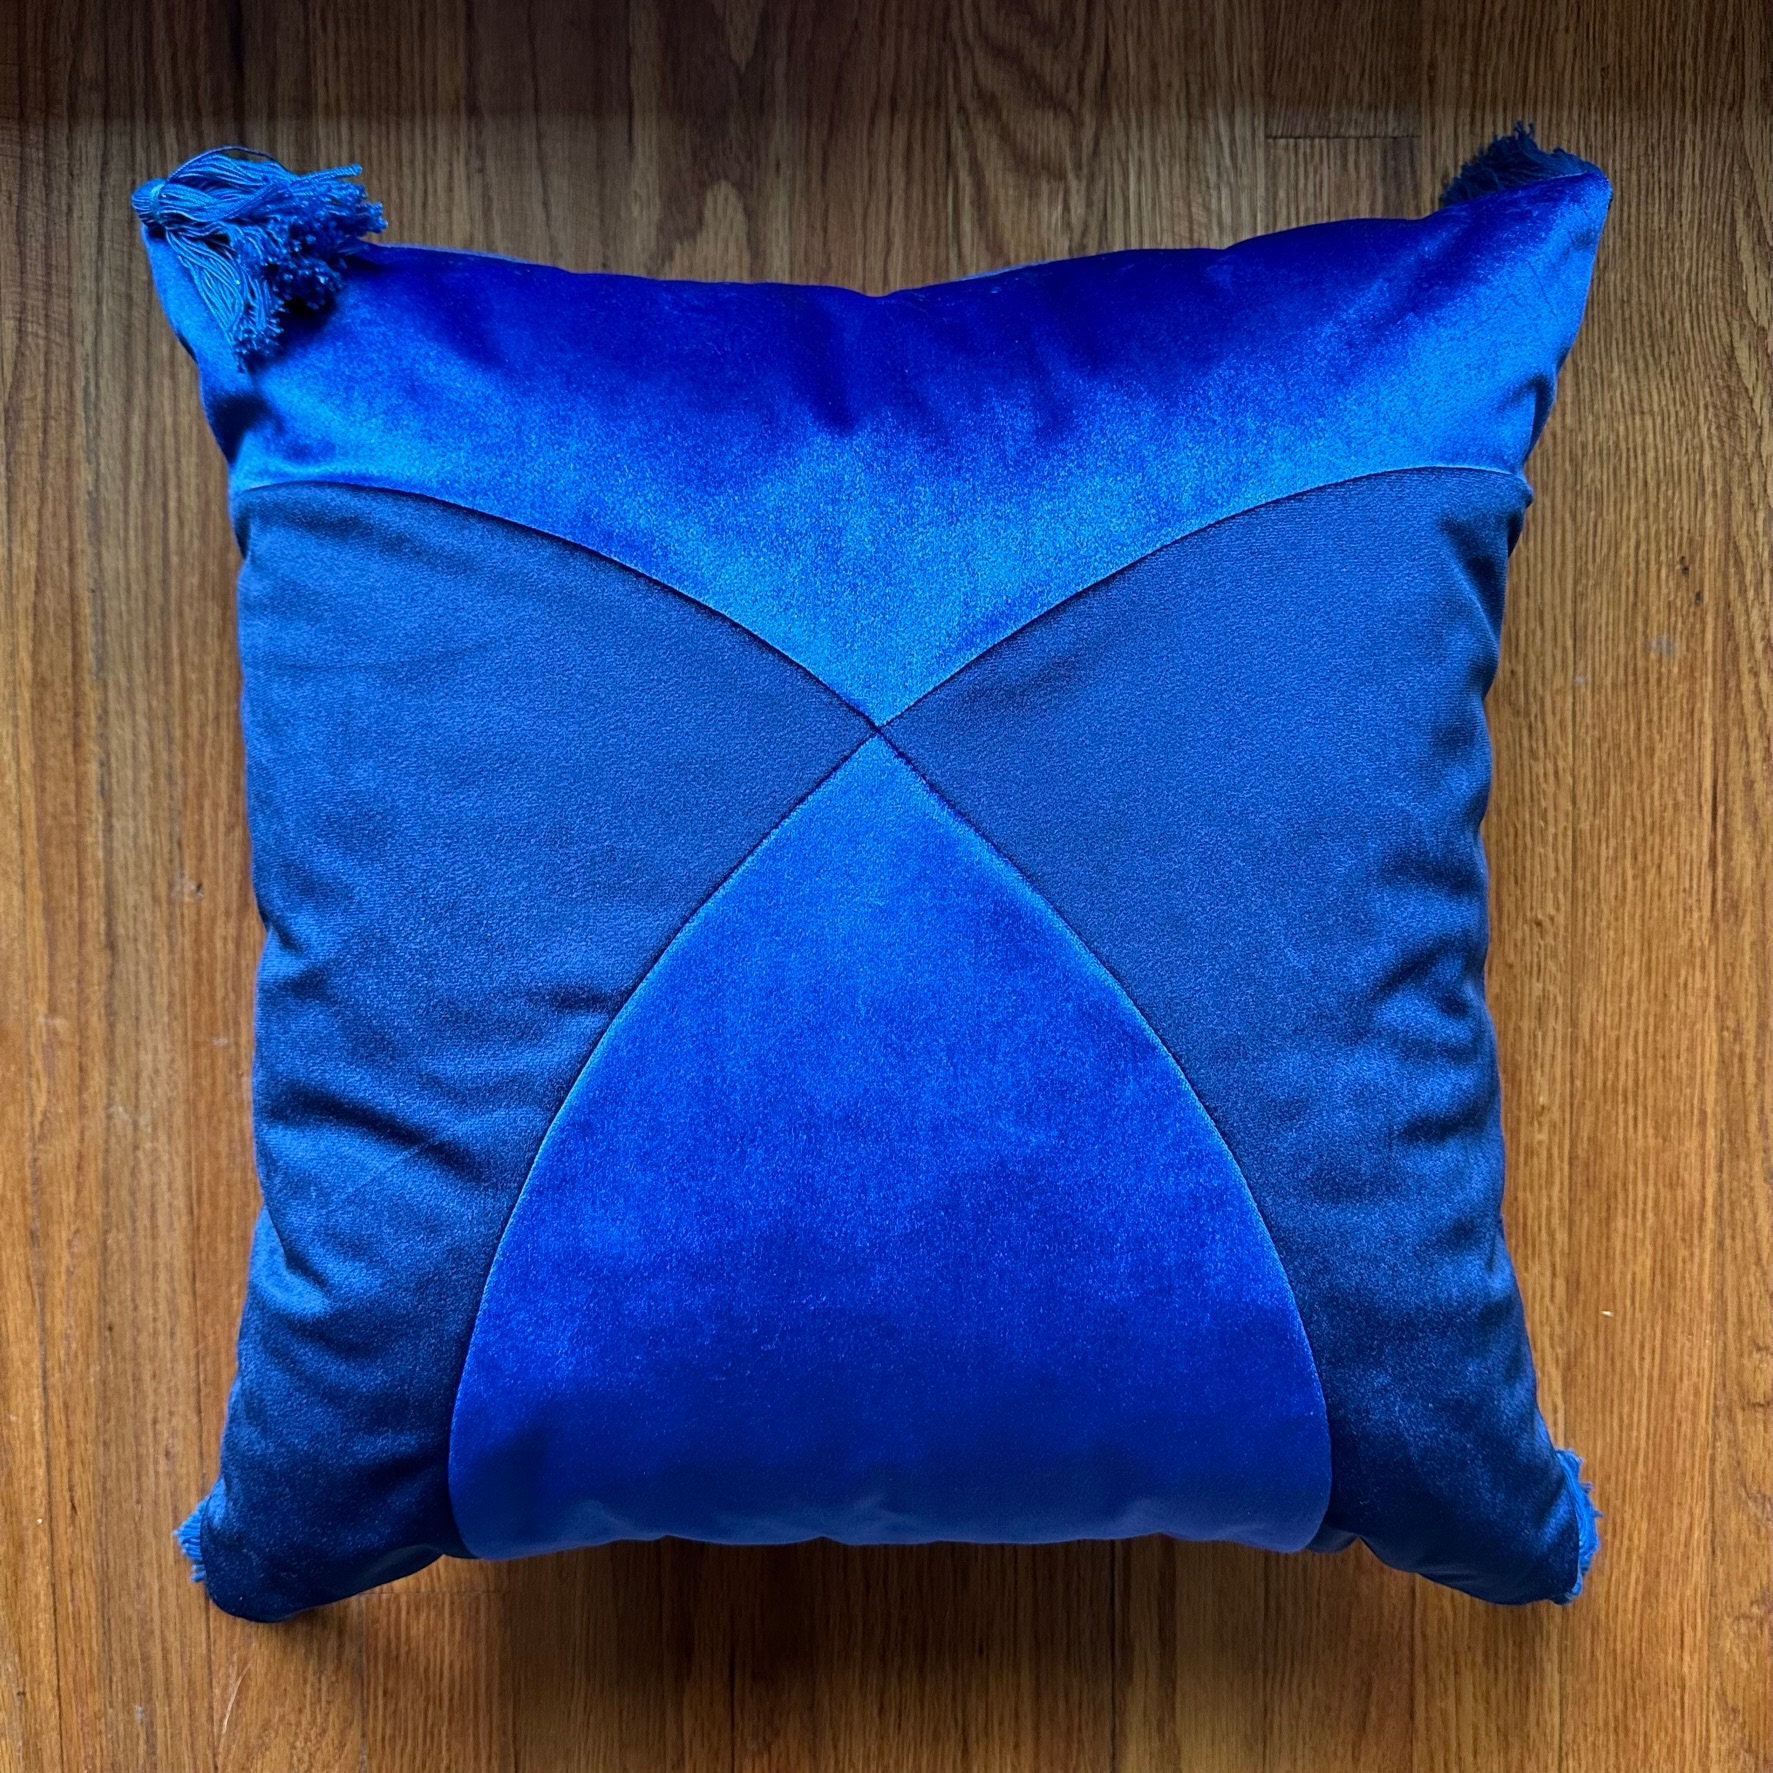 Organic Cotton and Kapok Decorative Pillow Inserts - Pure Upholstery